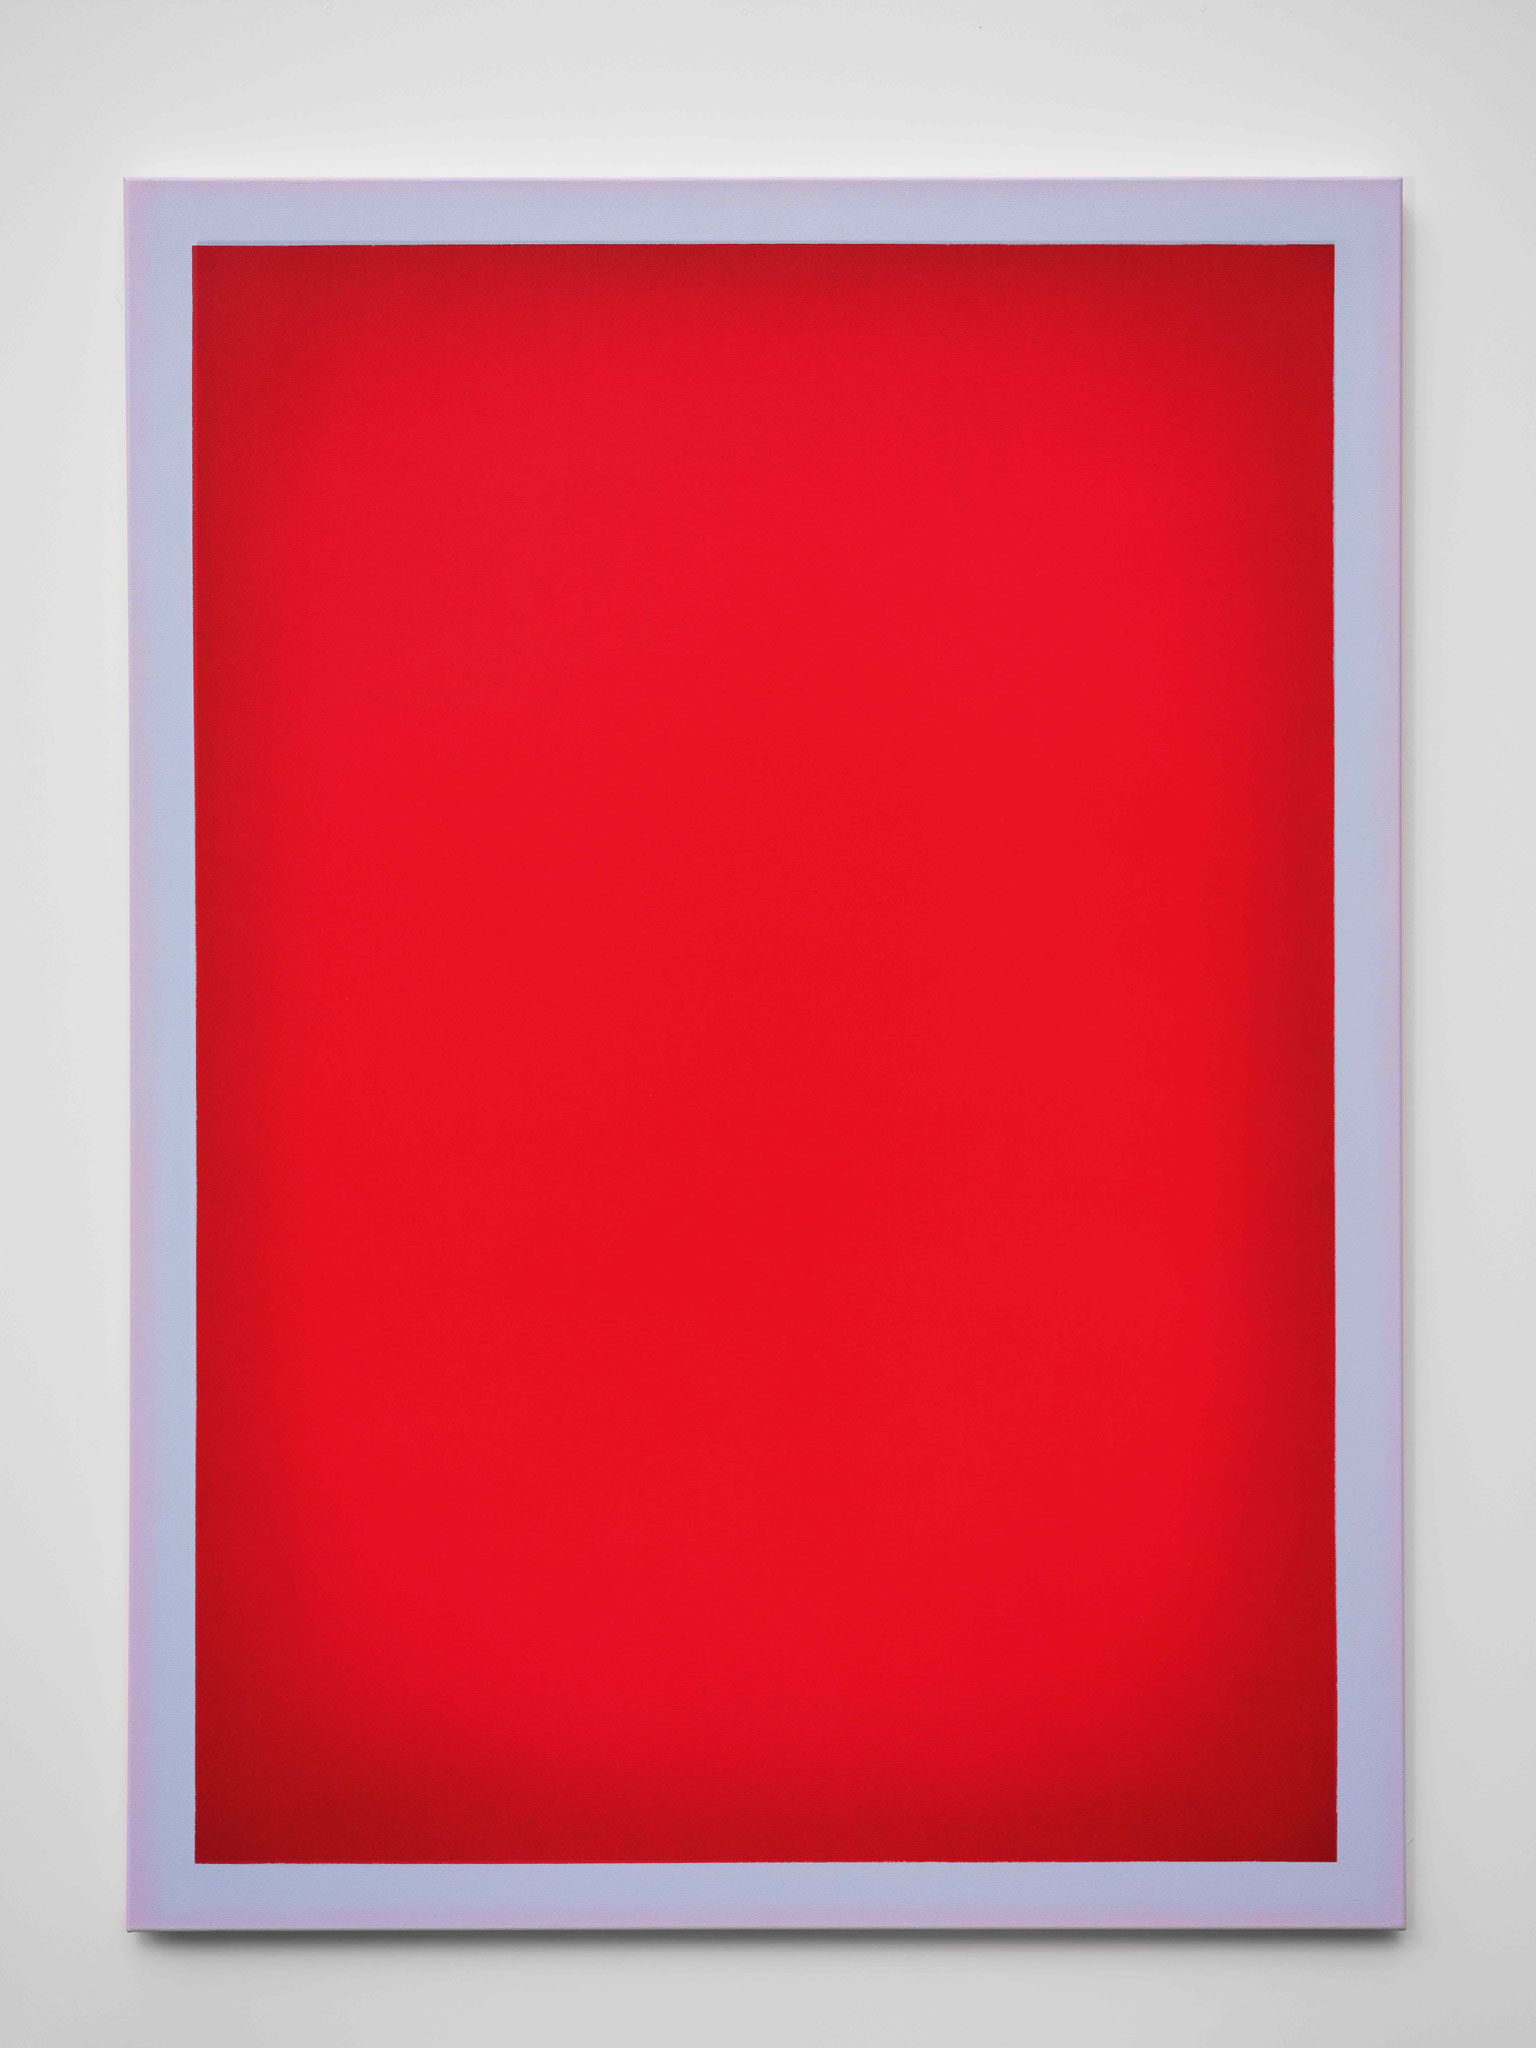 Alina Birkner "Untitled (Rubedo)" 2019, 180x130 cm, Acrylic on Canvas